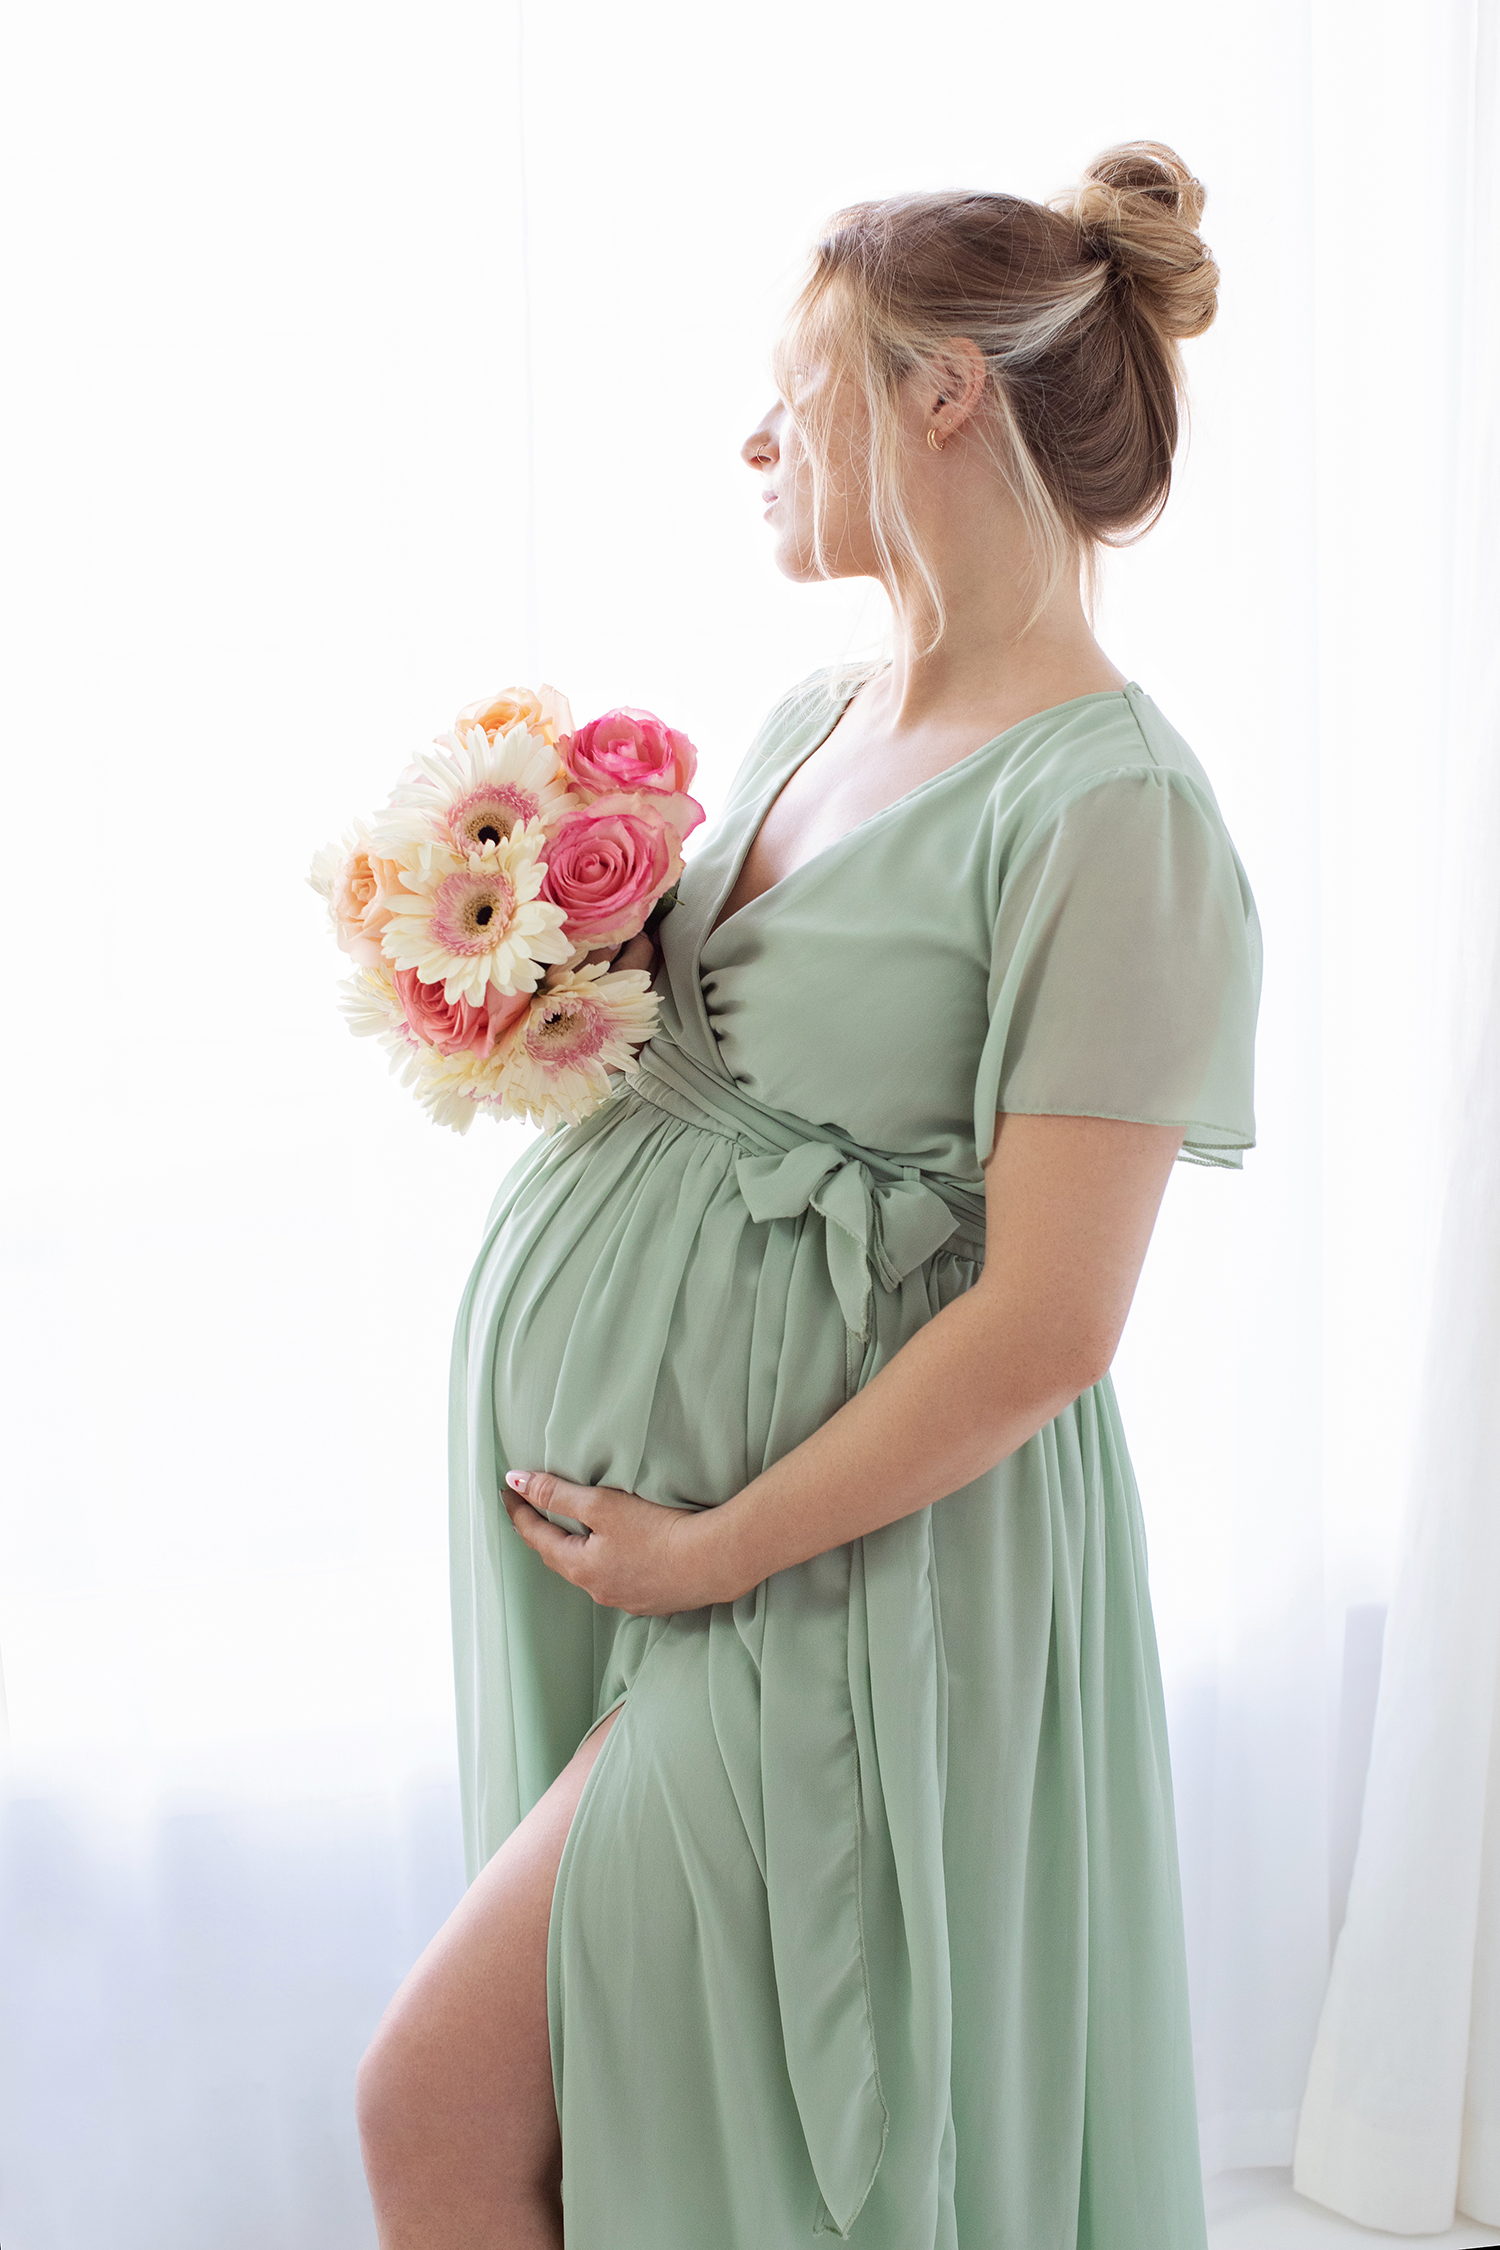 An elegant maternity photoshoot.